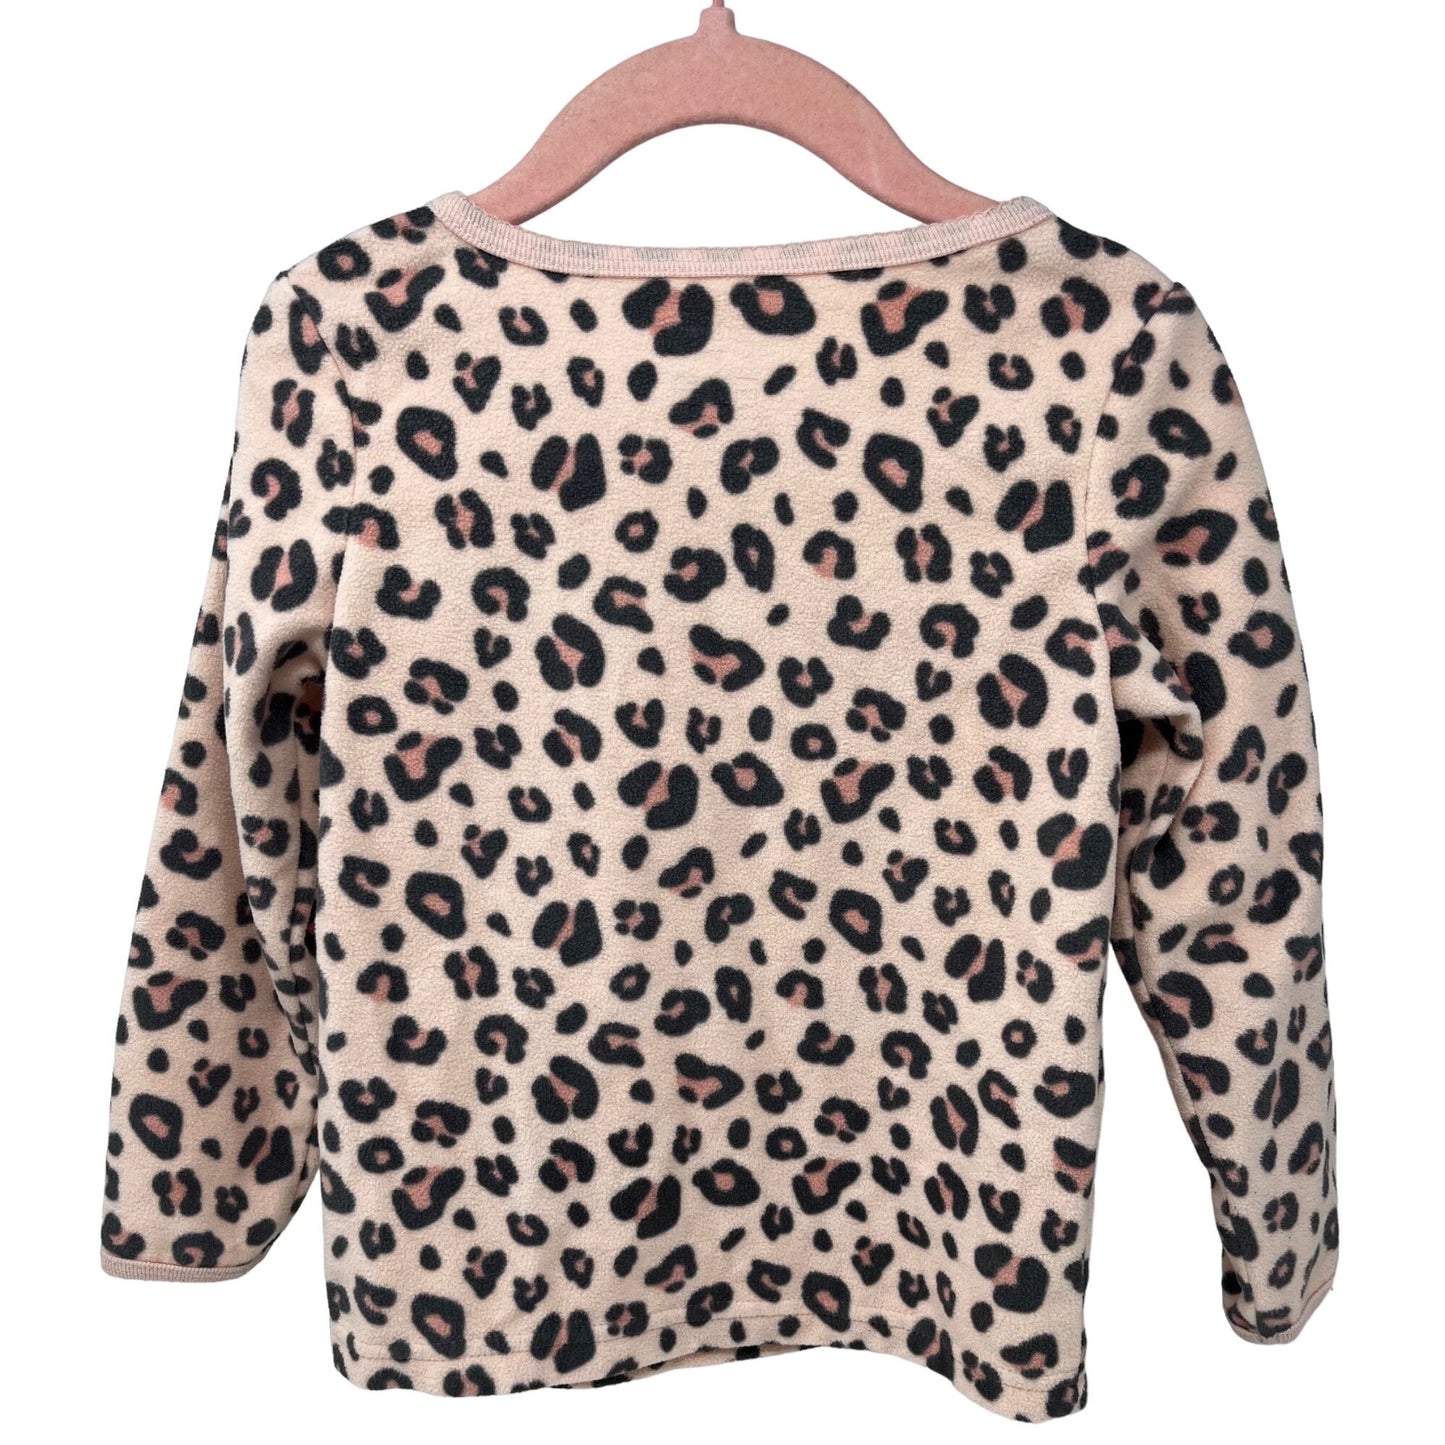 Carter's Girl's Size 3 Toddler Pink/Black Leopard Print Long-Sleeved Flannel Top